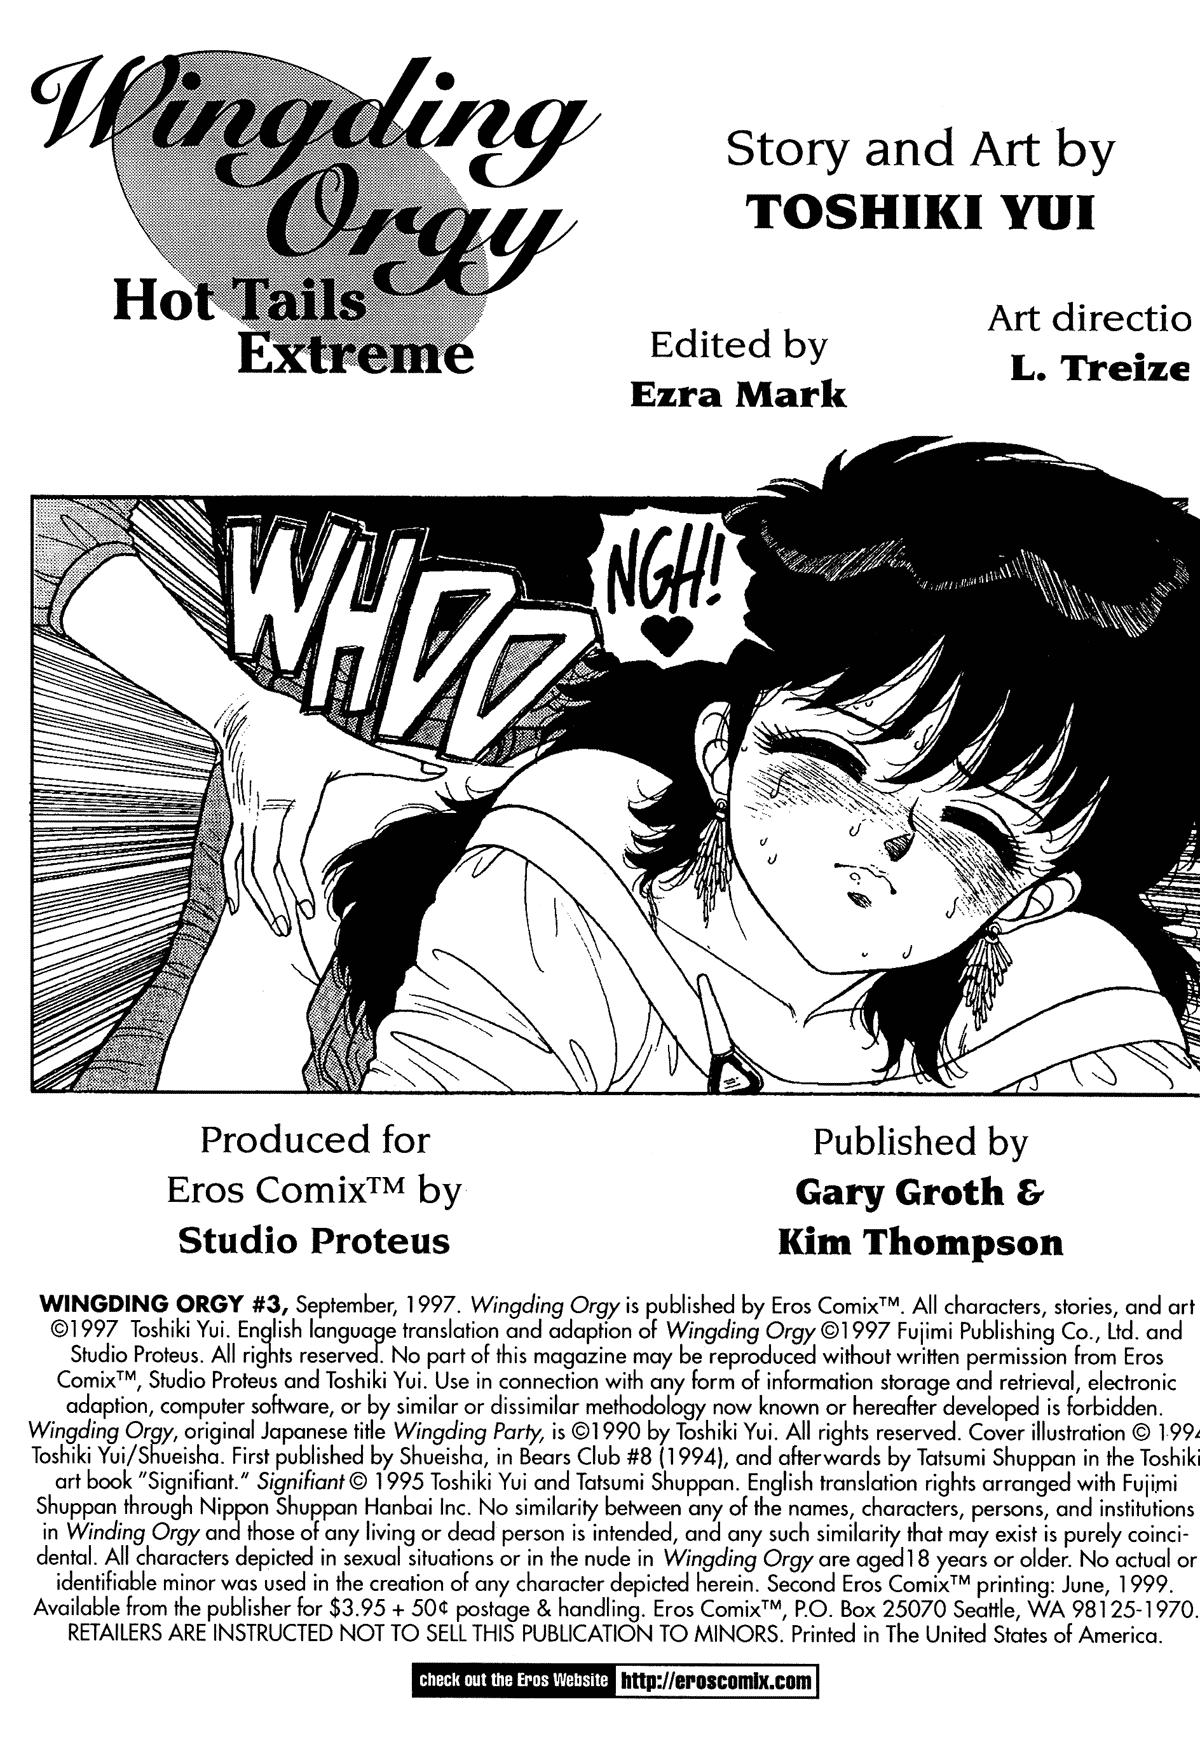 [Toshiki Yui] Wingding Orgy: Hot Tails Extreme #3 [English] 